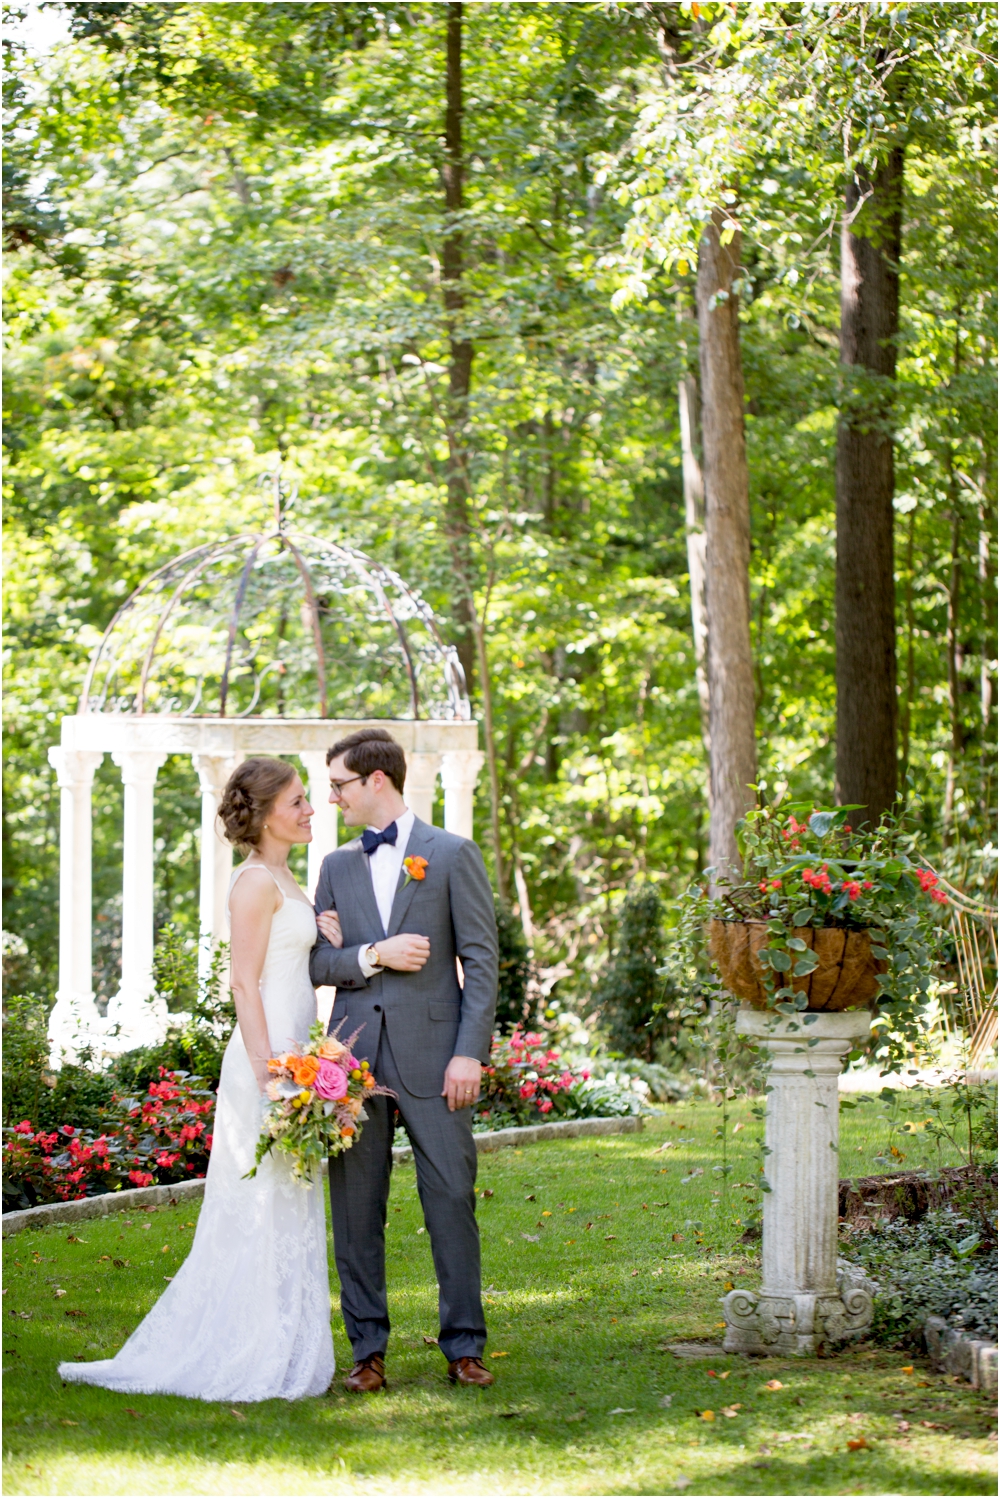 daniel chrissy gramercy mansion outdoor garden wedding living radiant photography_0116.jpg